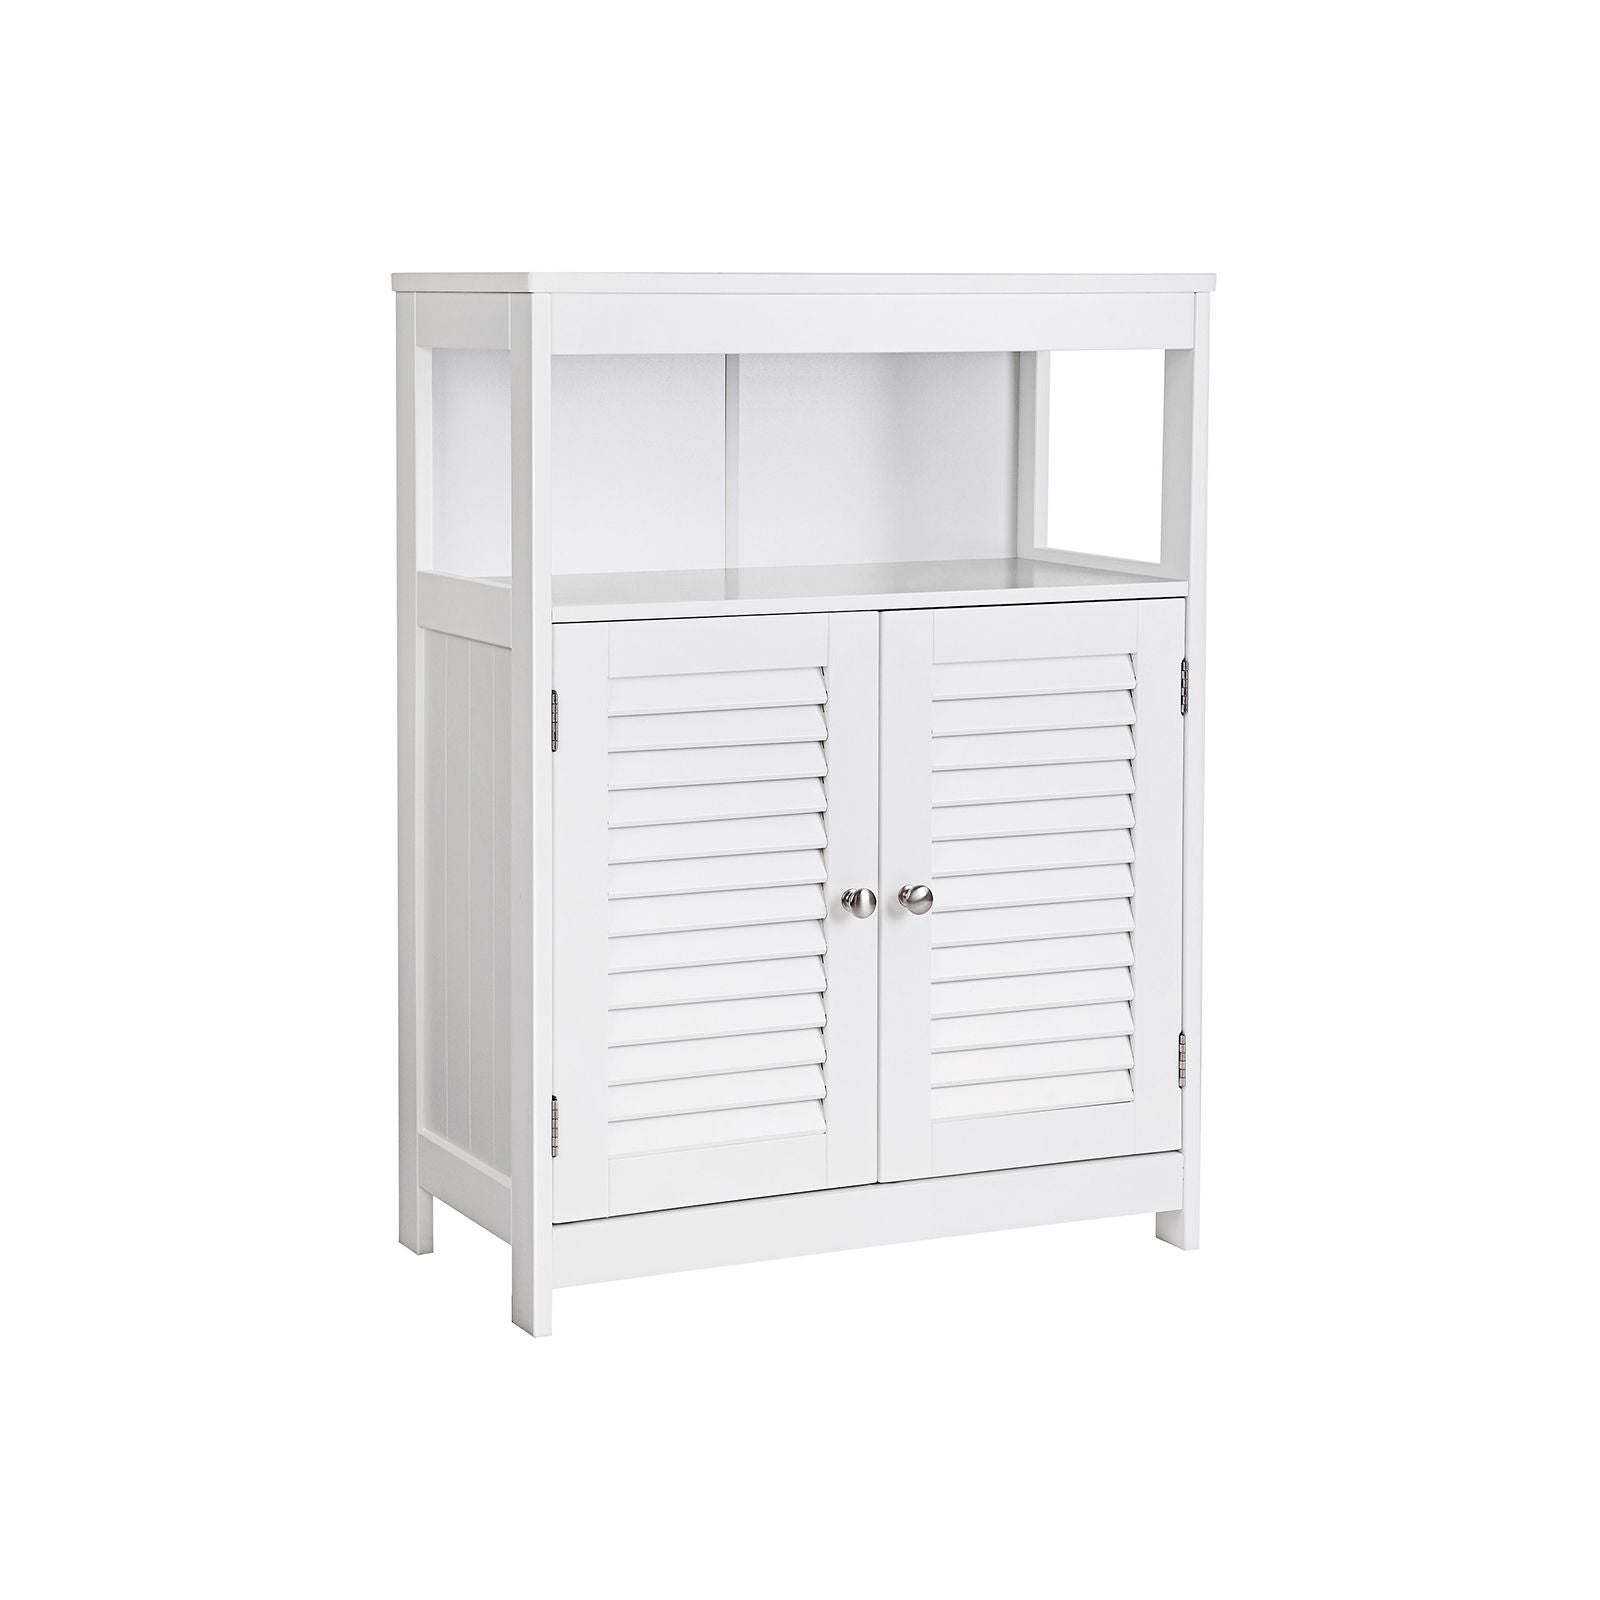 Image of Songmics - vasagle Wooden Bathroom Floor Cabinet Storage Organizer Rack Cupboard Free Standing with Double Shutter Door White by BBC40WT